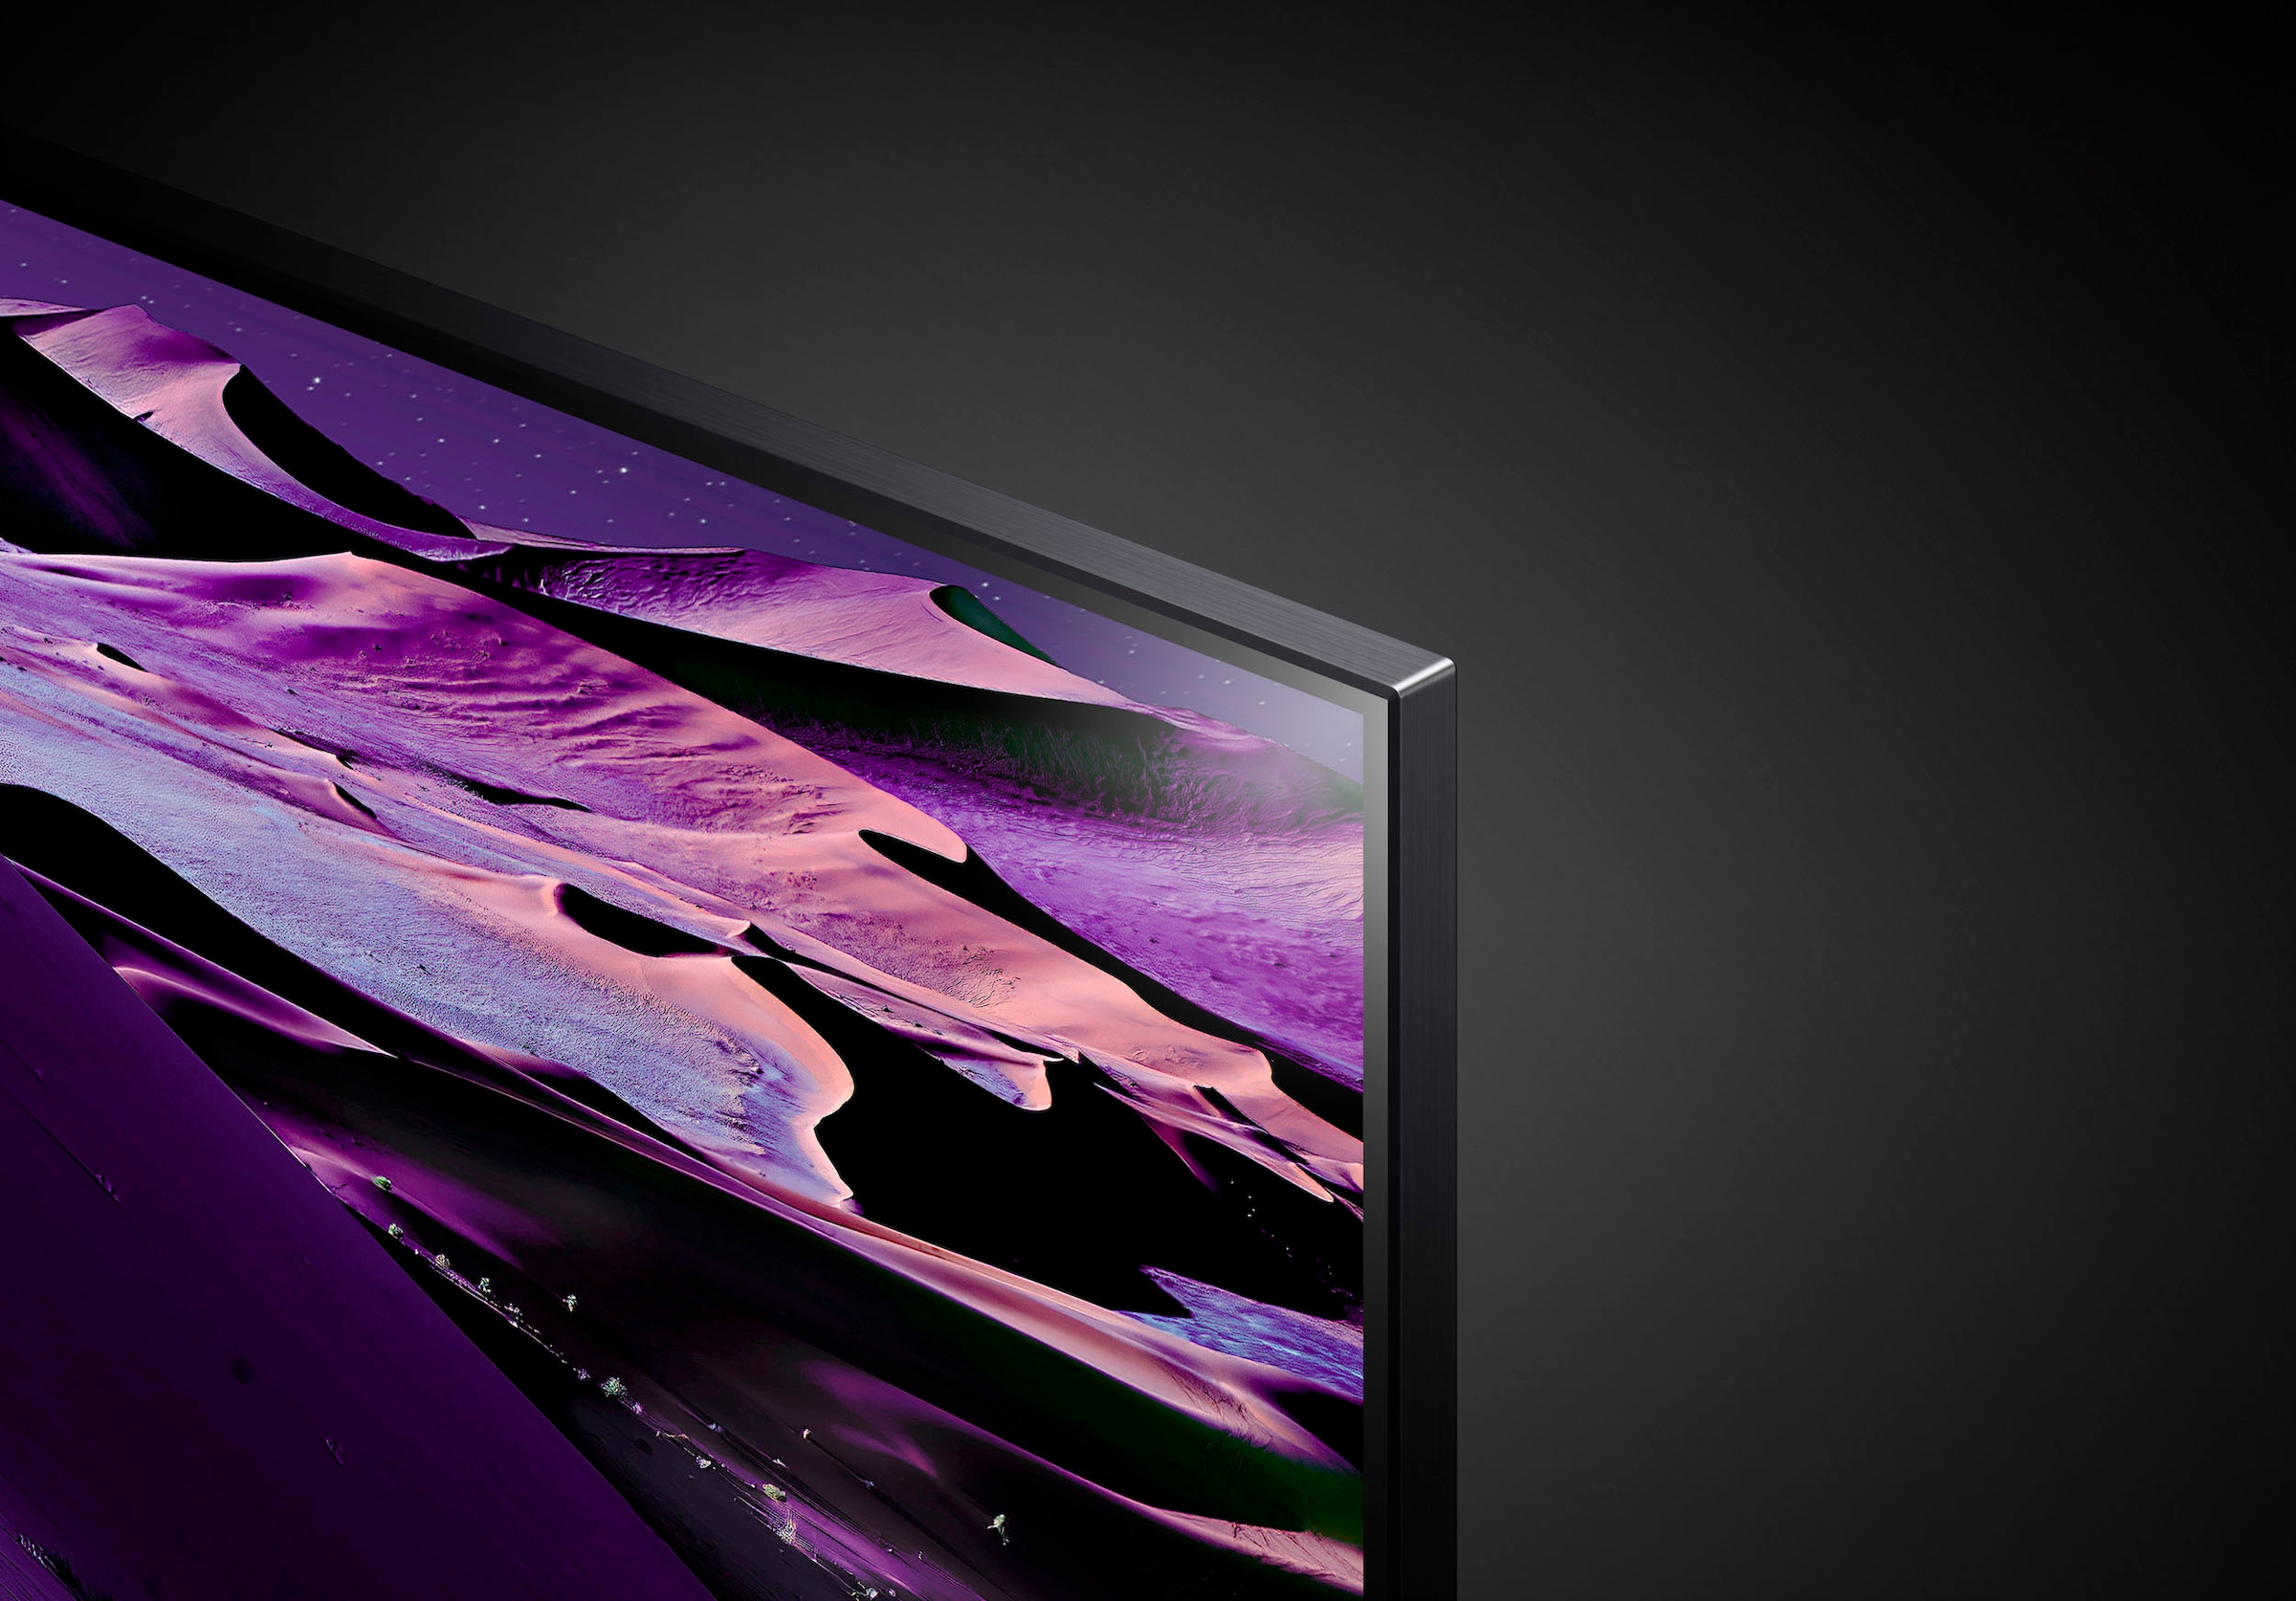 LG QNED-Fernseher, 189 cm/75 Zoll, 4K Ultra HD, Smart-TV